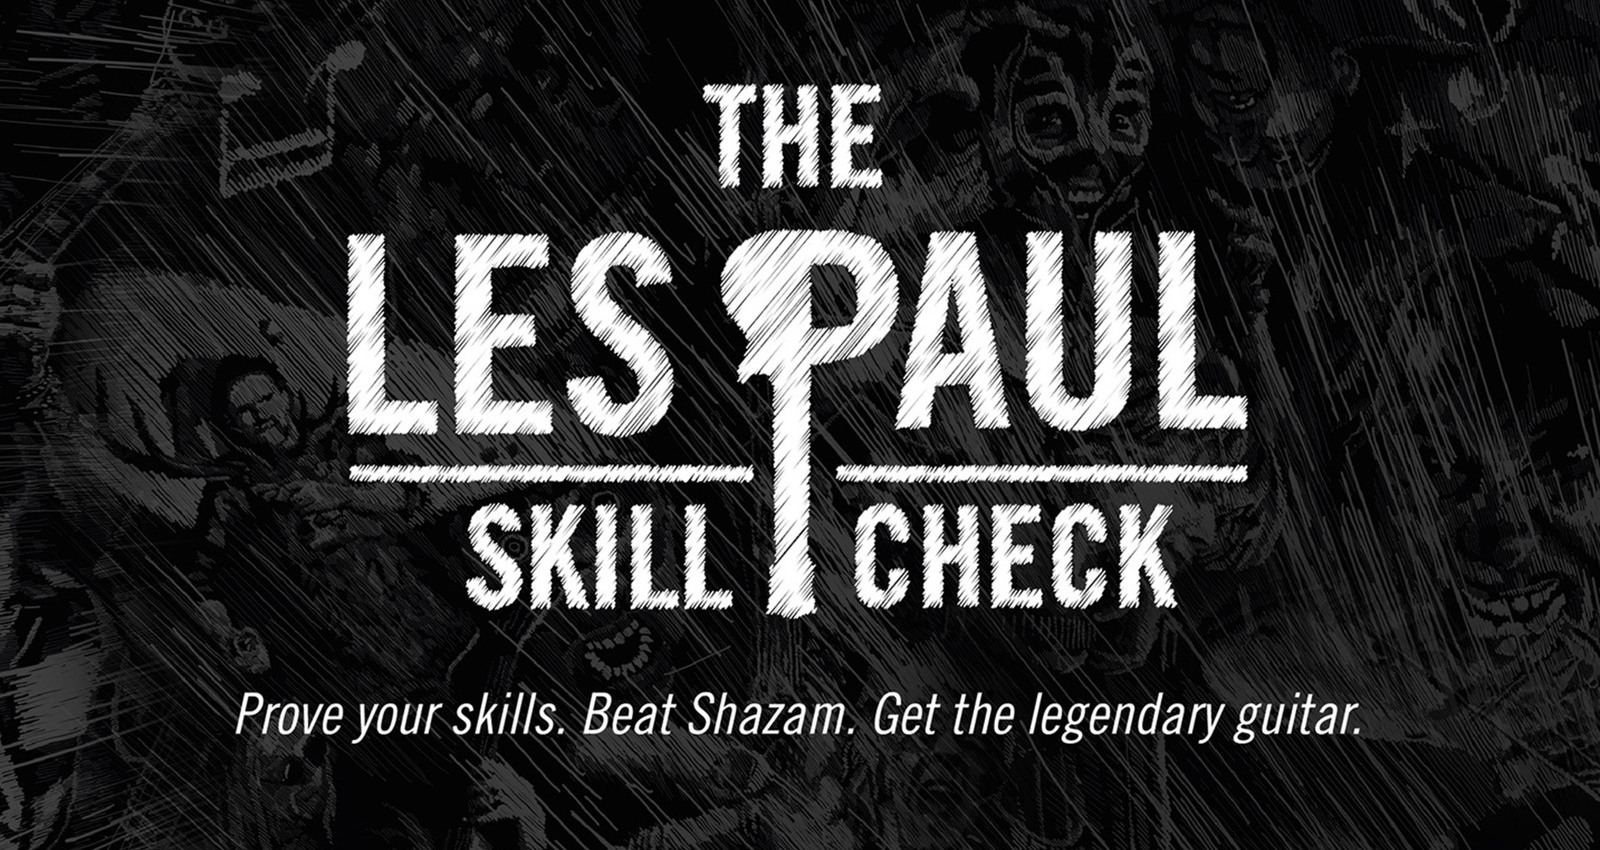 The Les Paul Skill Check